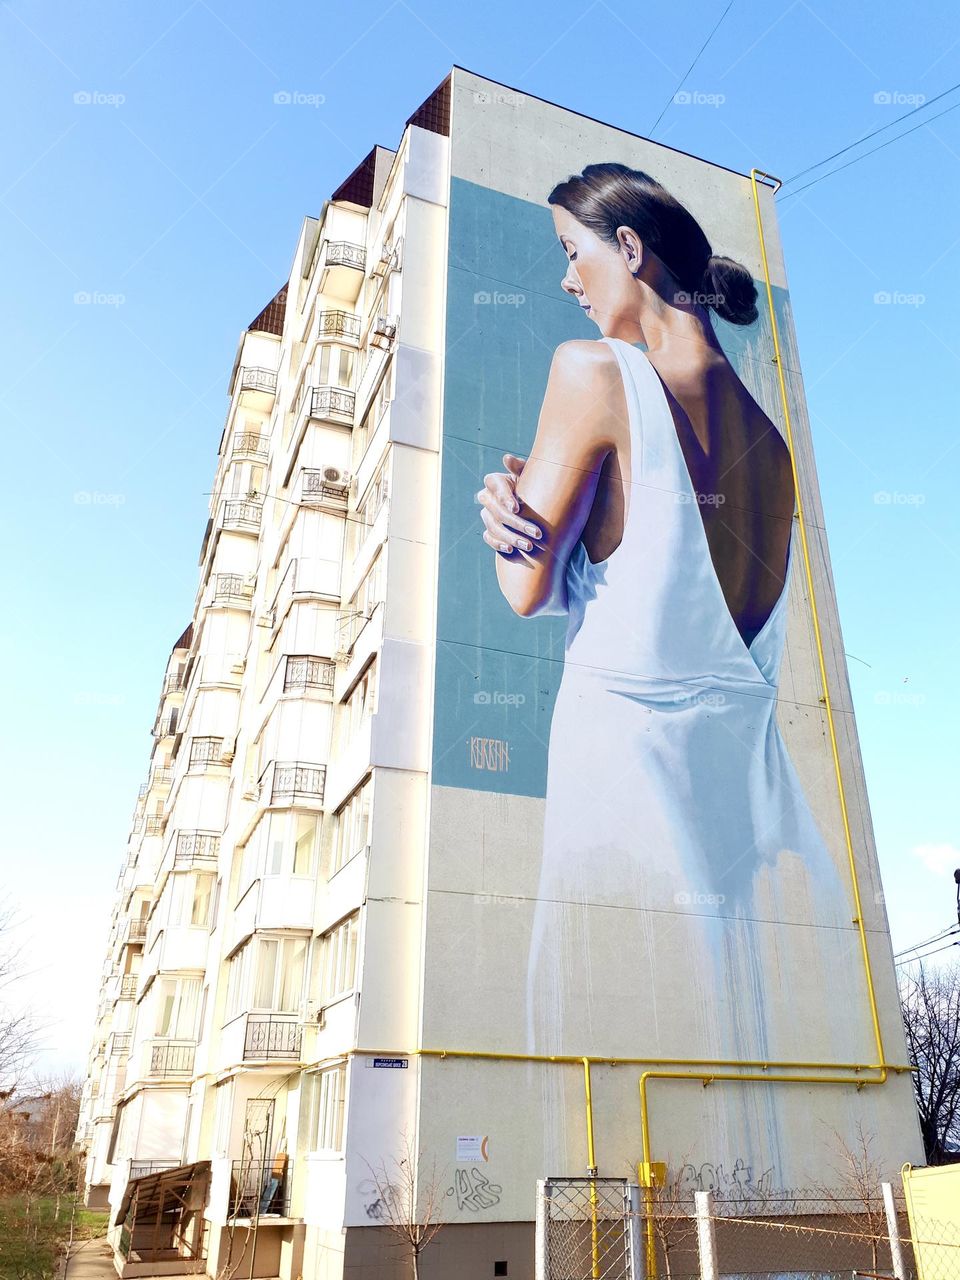 Graffiti of woman in white dress 